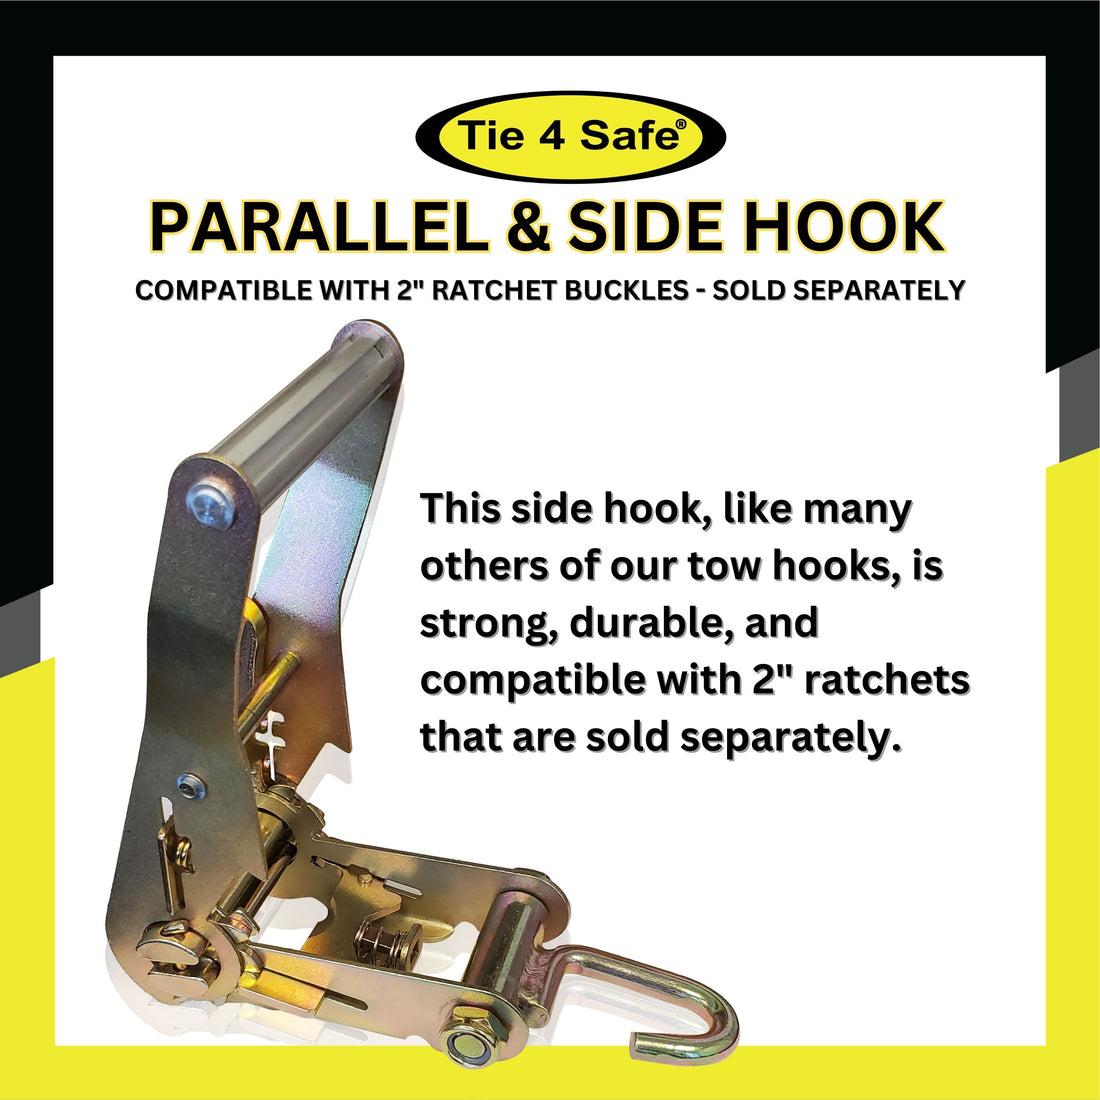 Parallel & Side Hook Parallel & Side Hook